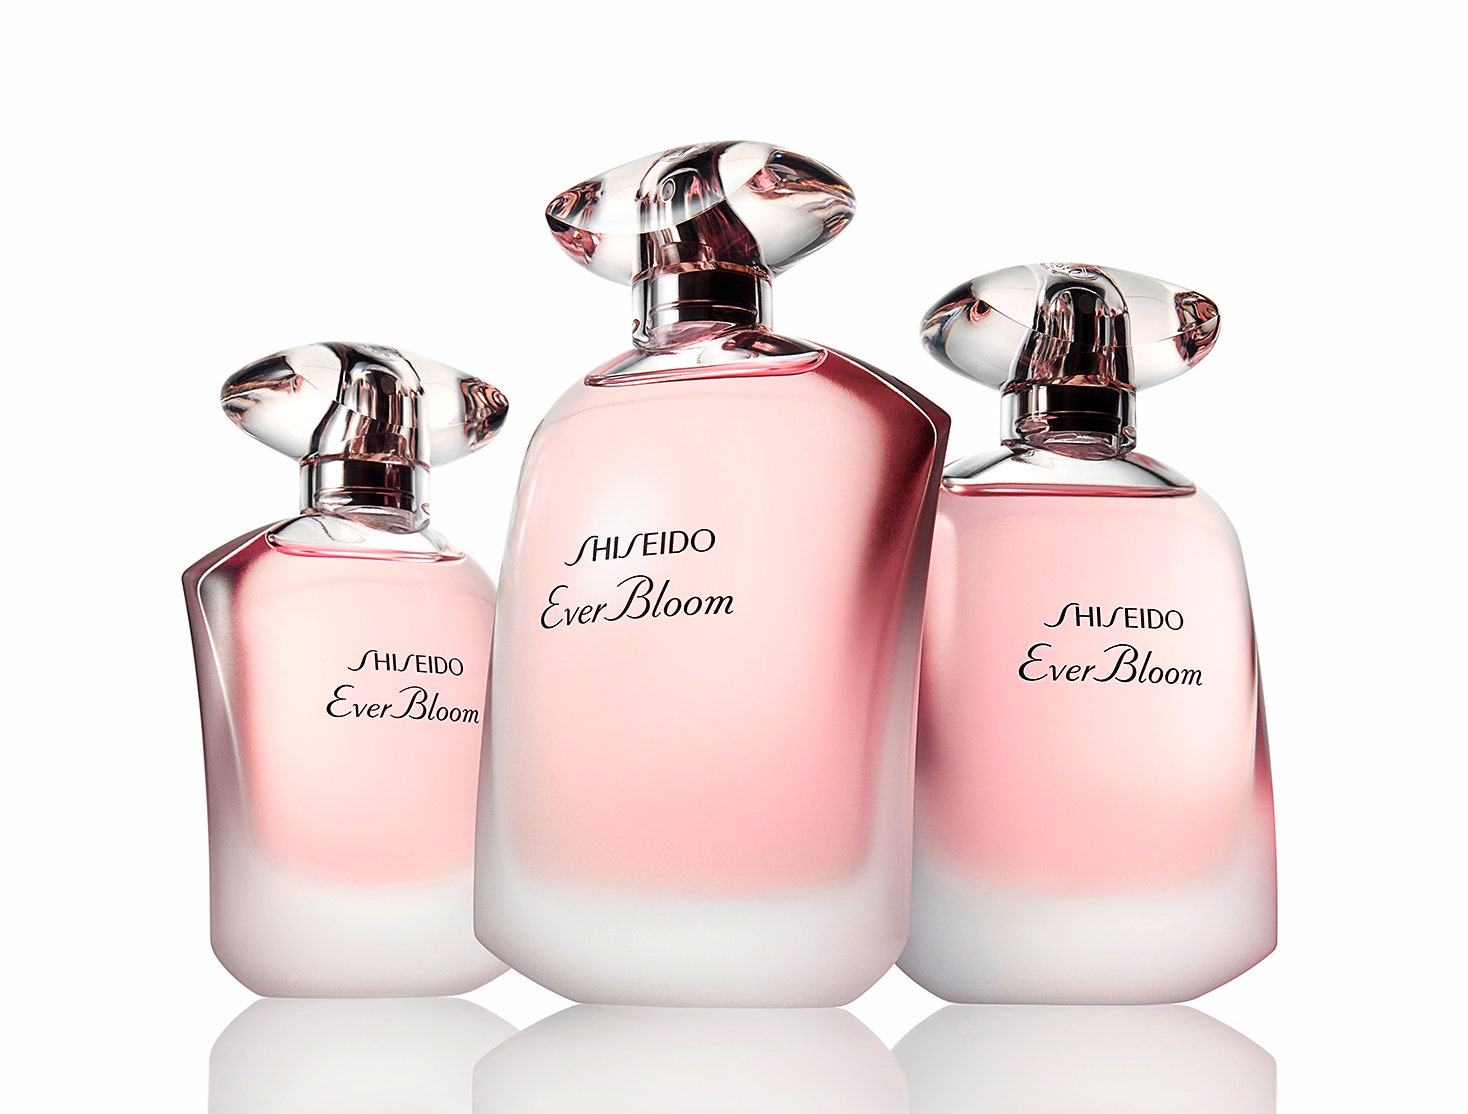 Shiseido аромат Ever Bloom EDT 3750 руб.  5450 руб. .